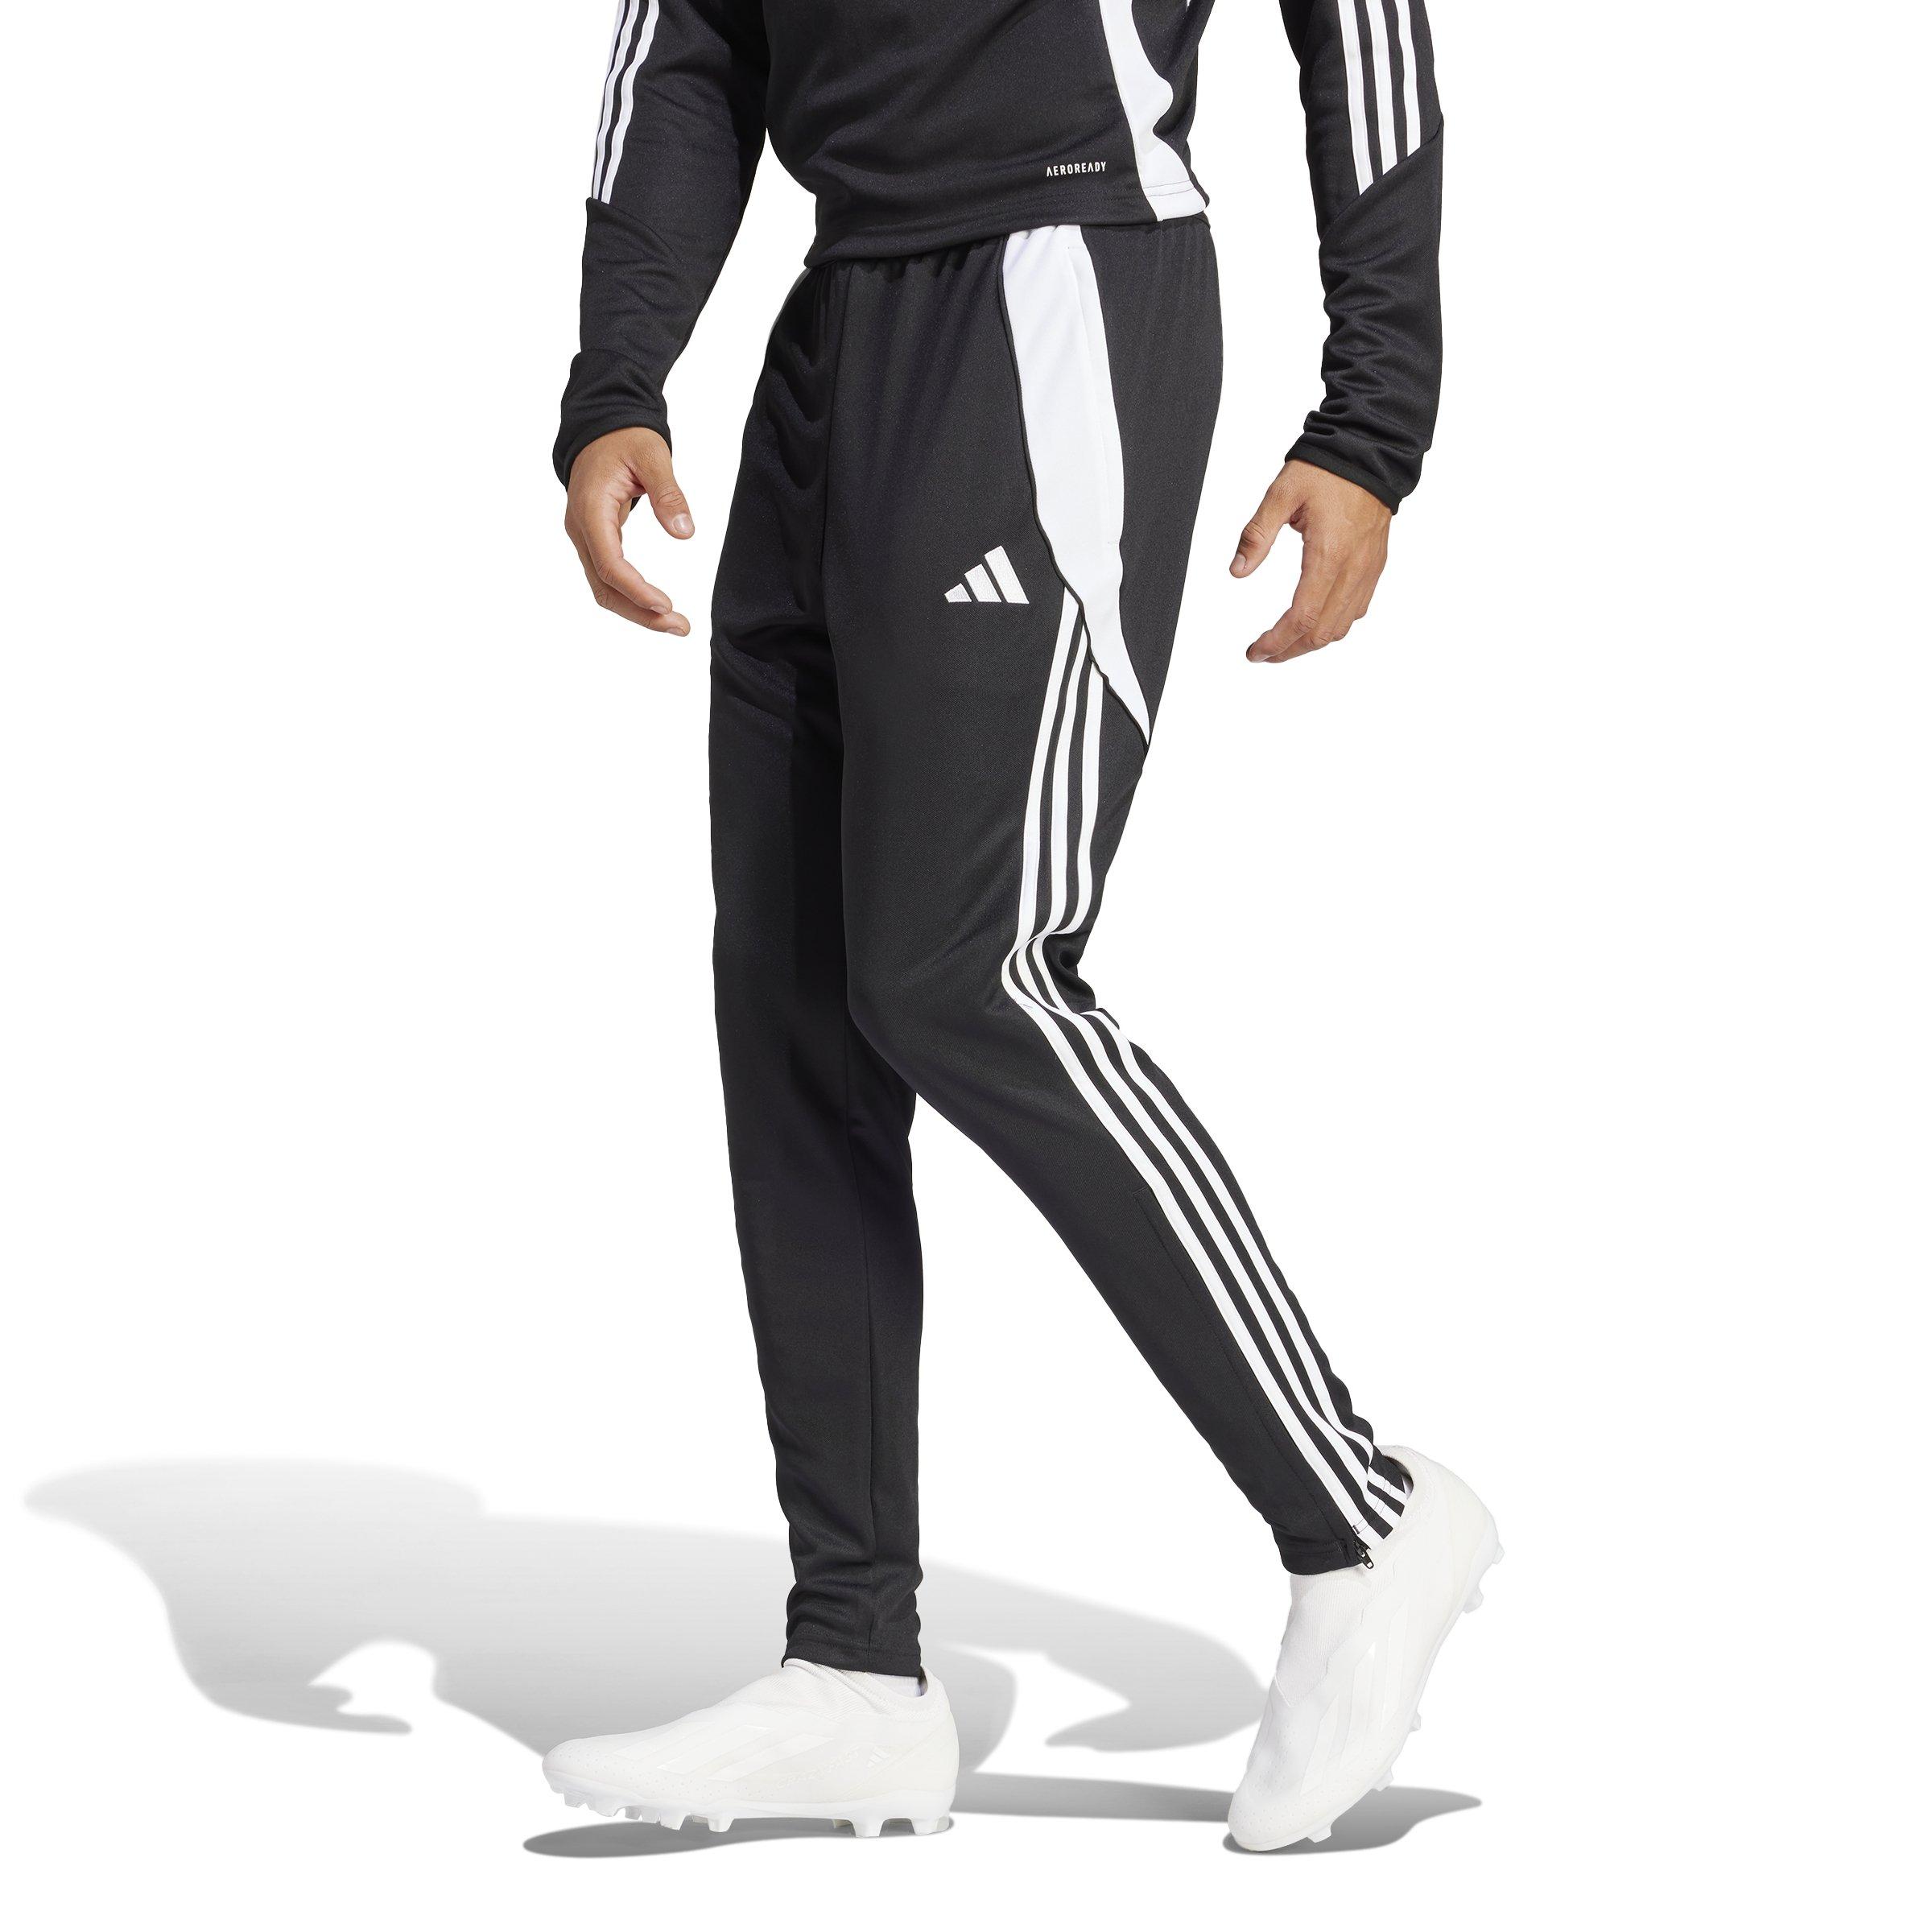 Size XS Adidas legging black New, Sports Equipment, Sports & Games